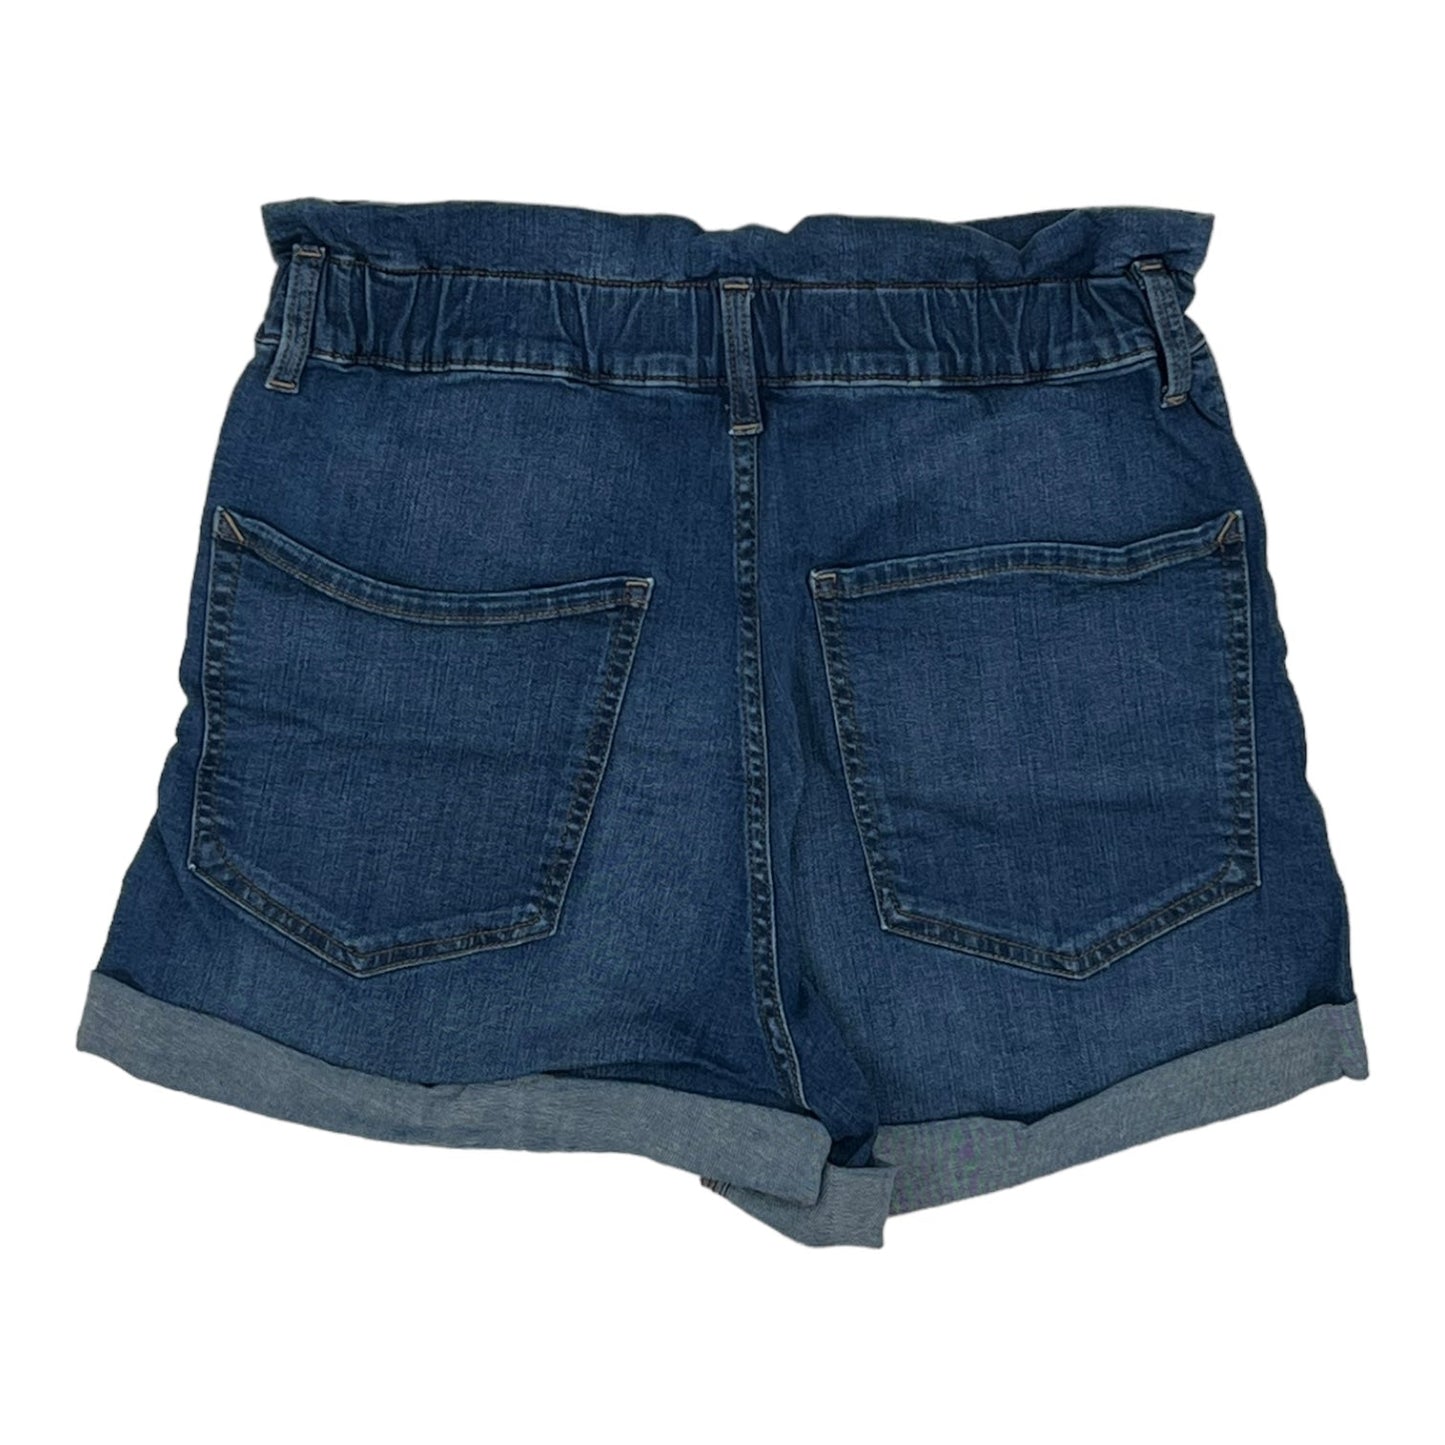 Blue Denim Shorts Express, Size M